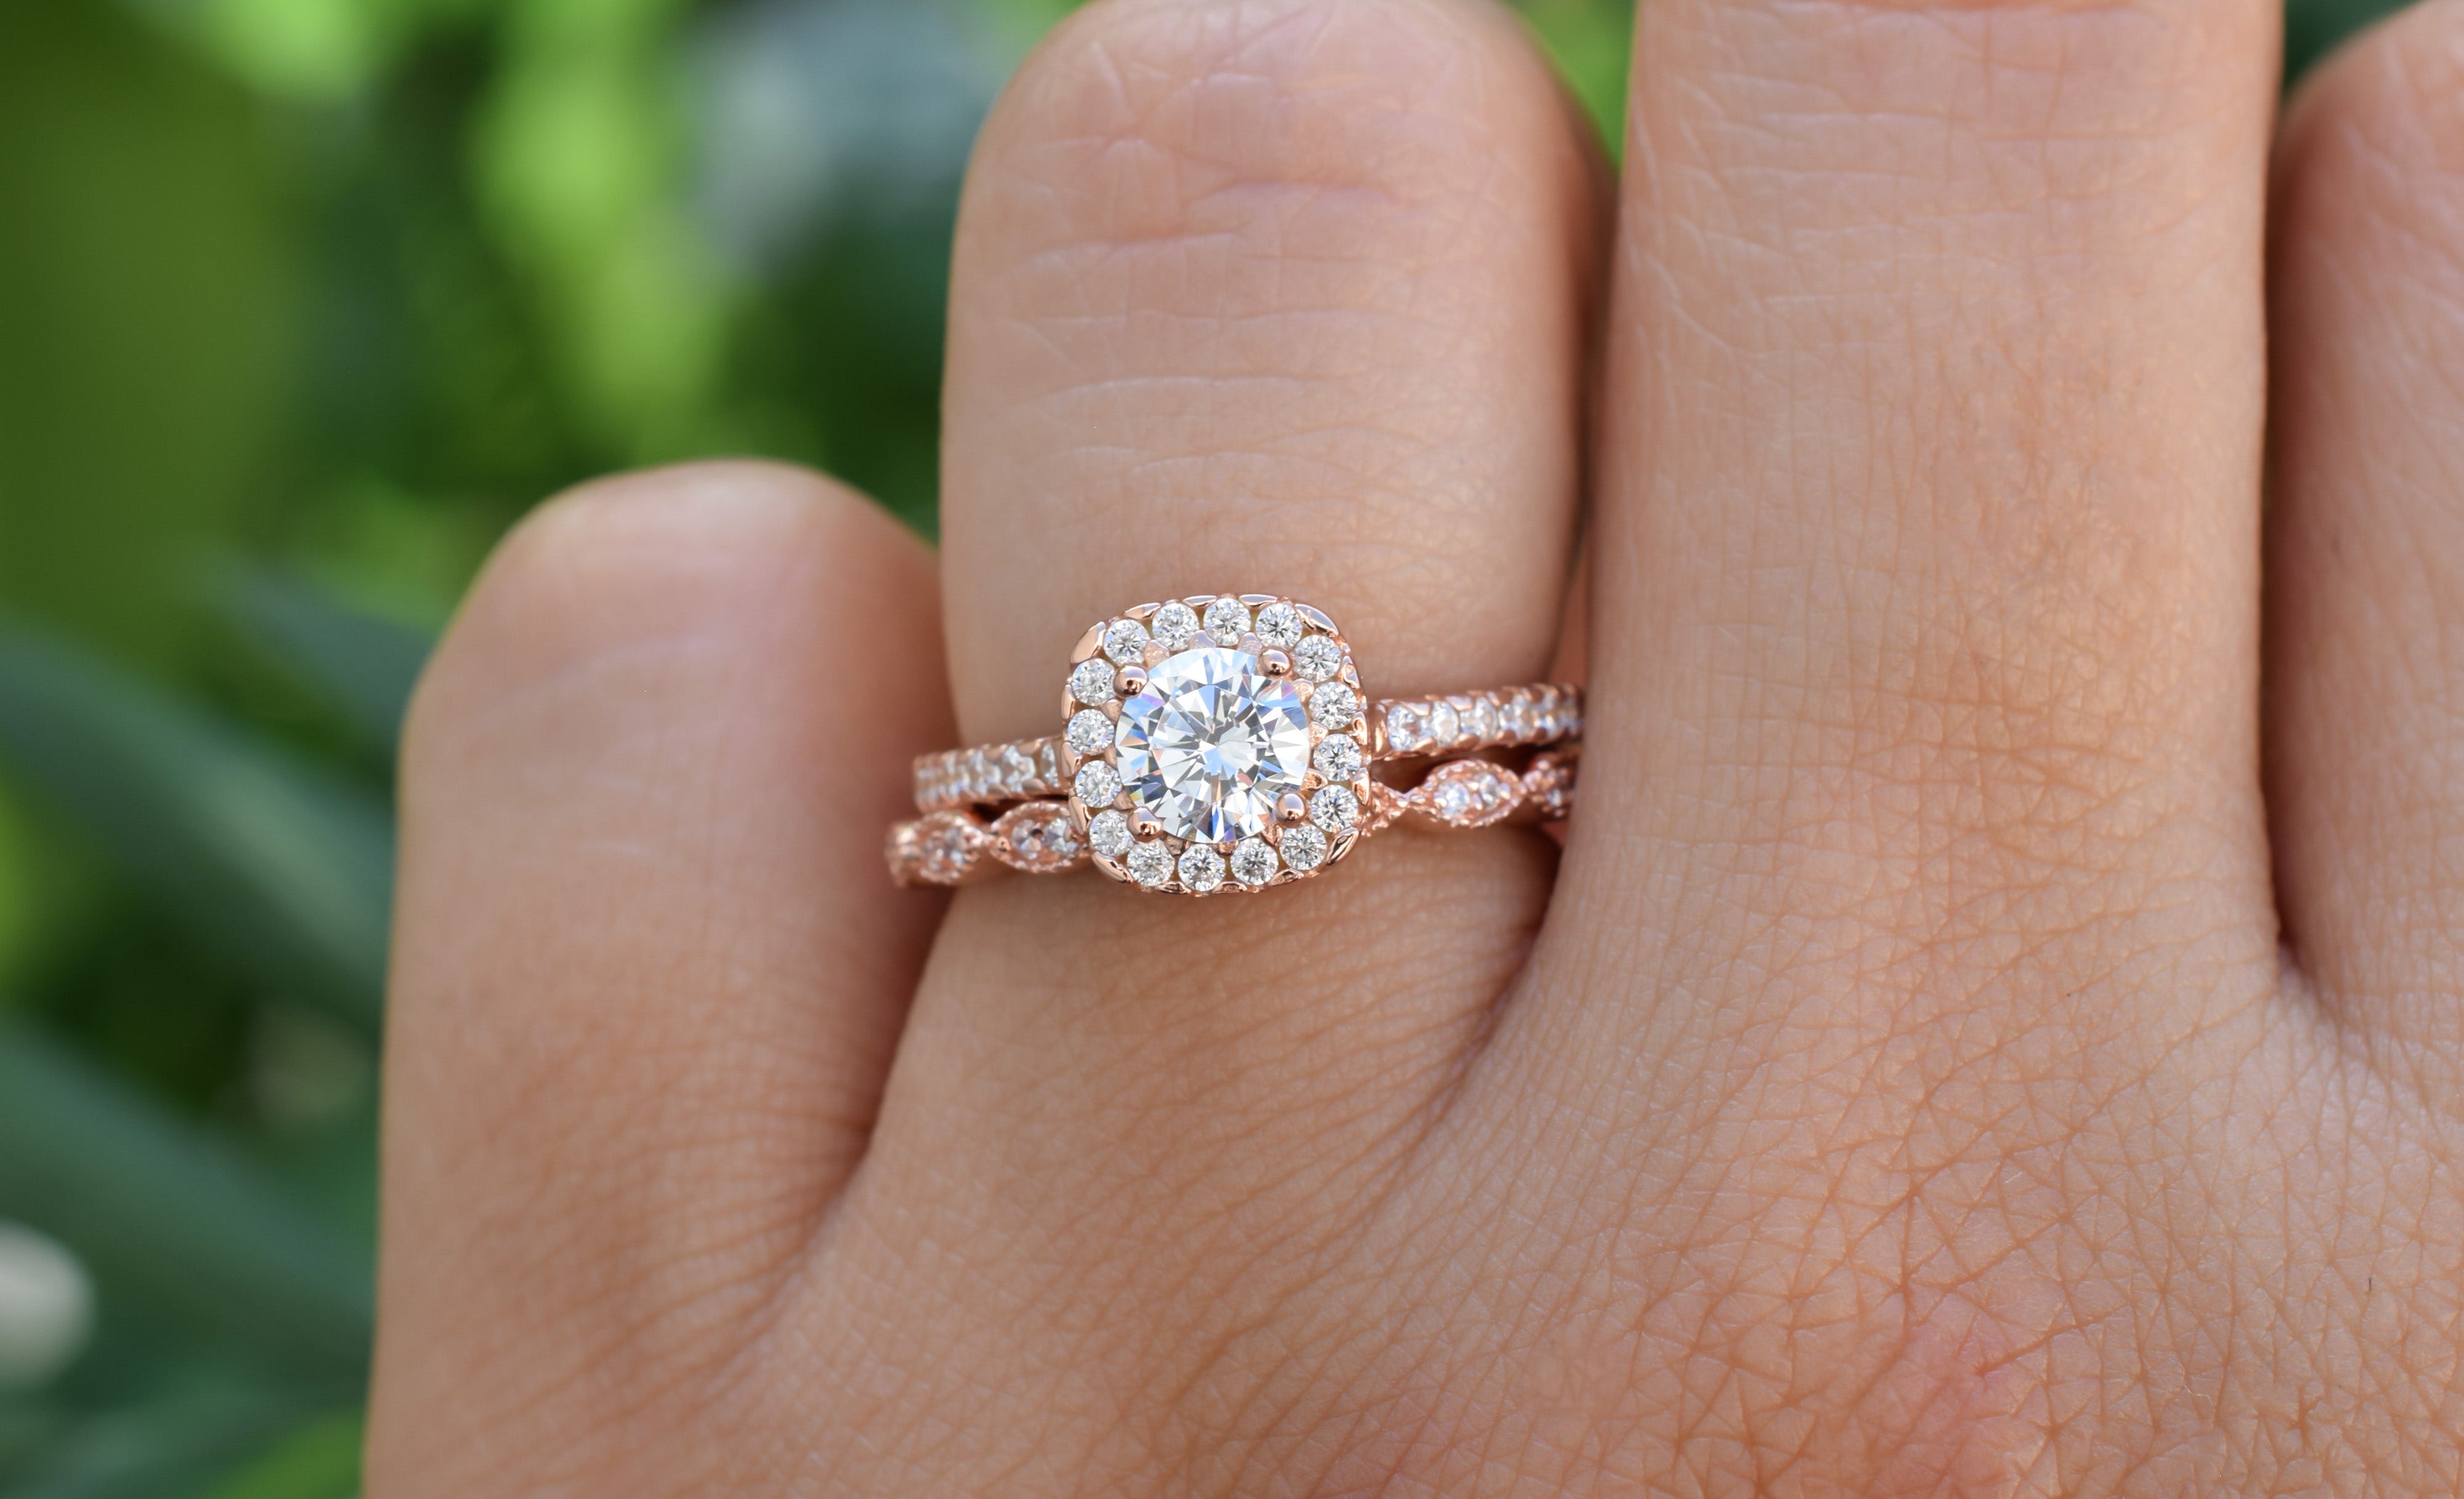 Ringset, Verlovingsring, trouwring, Halo ring, Zilveren ring, Gouden ringset, Solitaire ring, vriendschapsring, promise ring